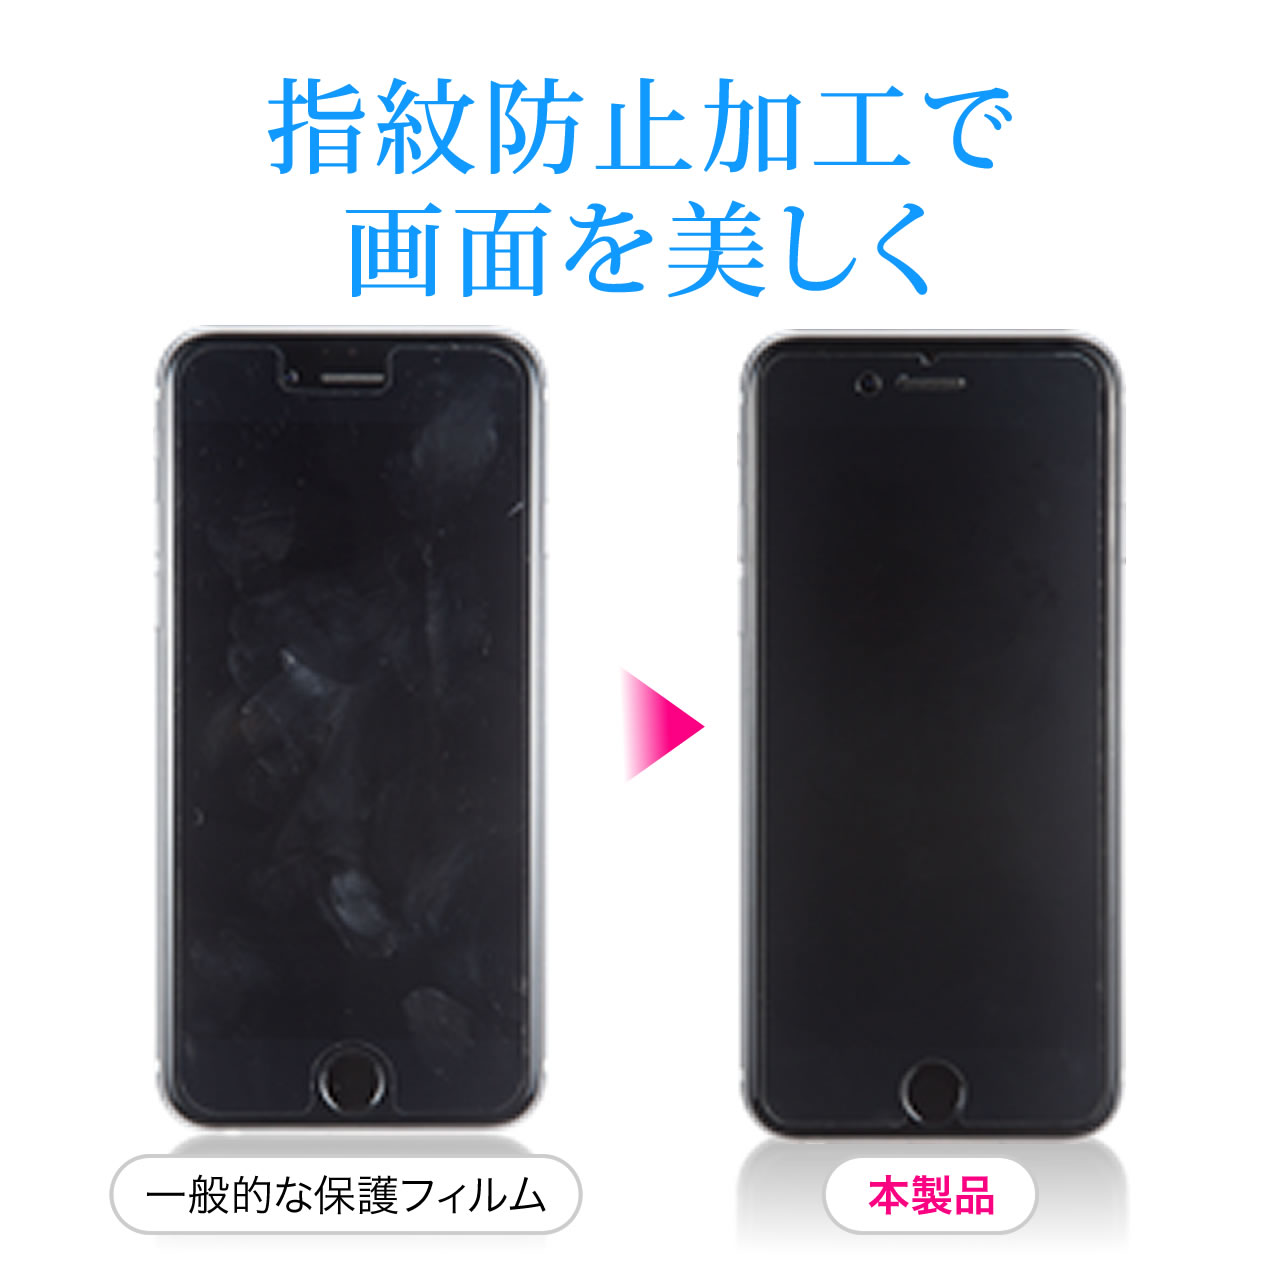 iPhone 6s/6pu[CgJbgtBidx3HE˖h~Ewh~j 200-LCD034B